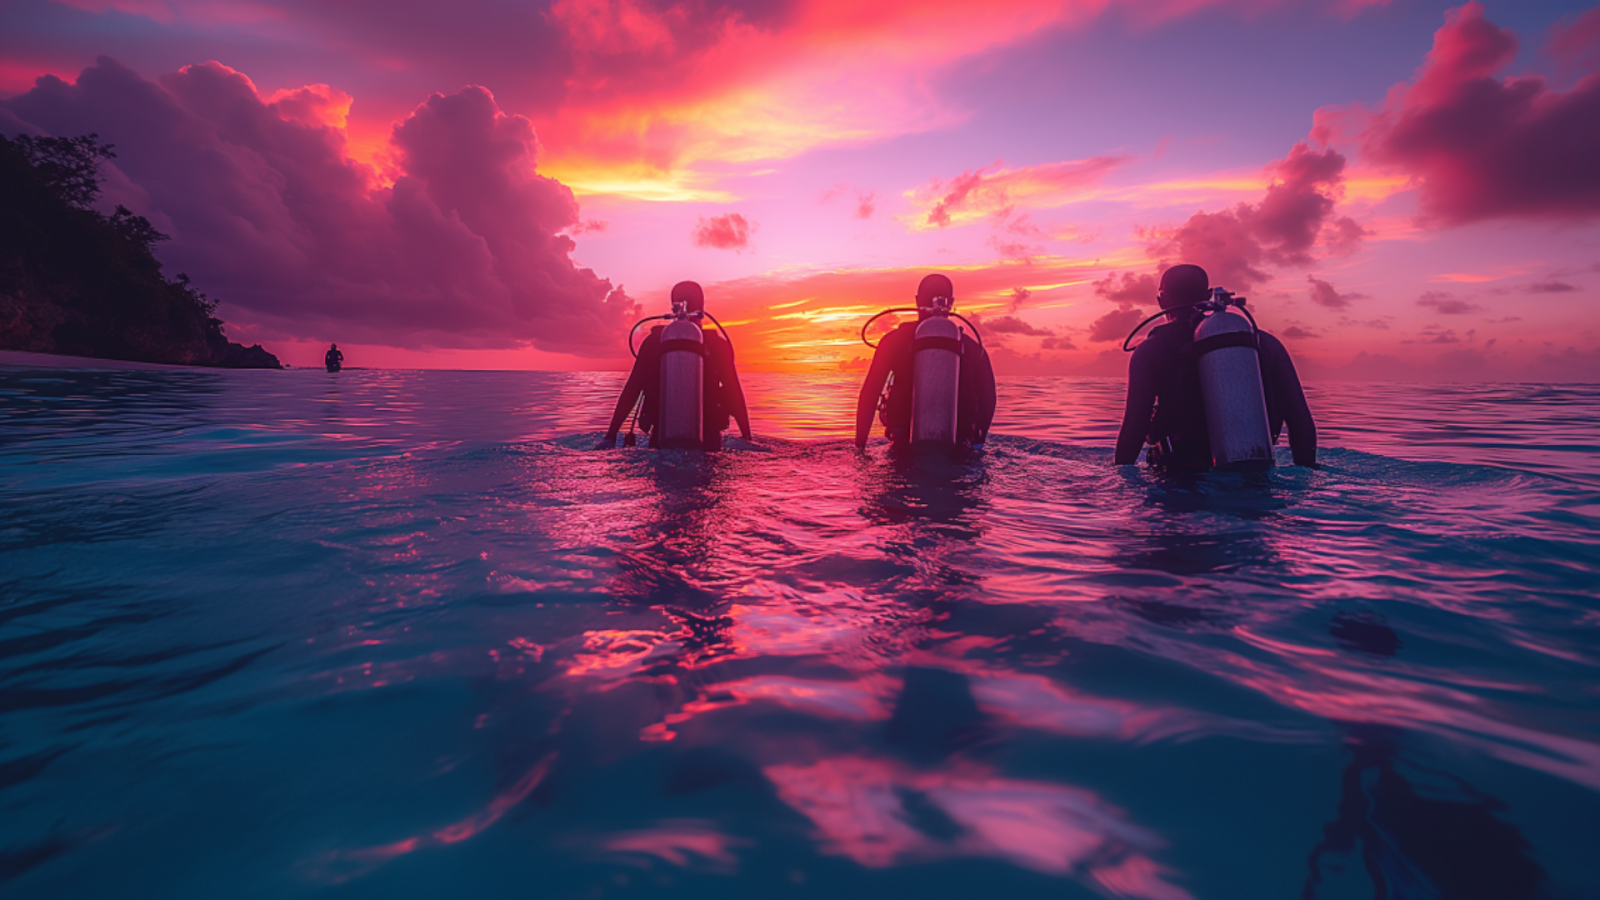 Scuba divers ready for a sunrise dive in Playa del Carmen.